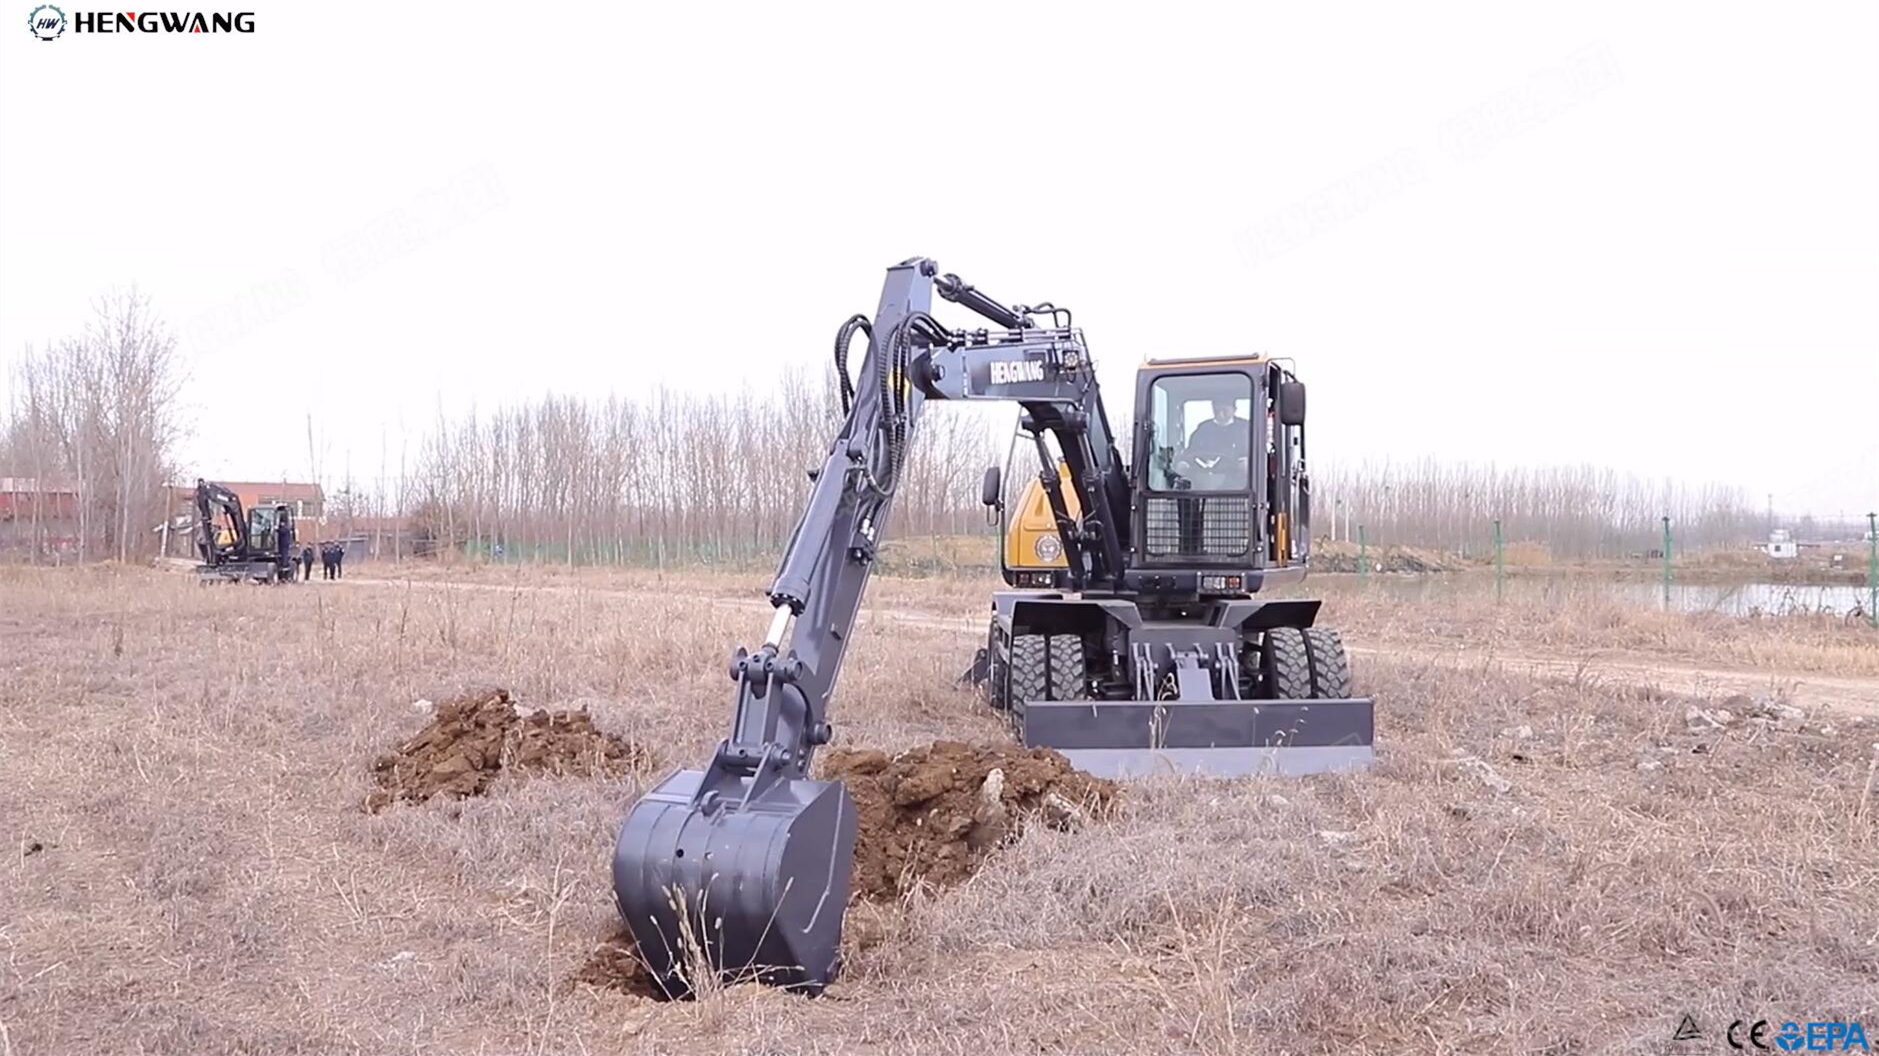 HW-110 wheel excavator operation shows